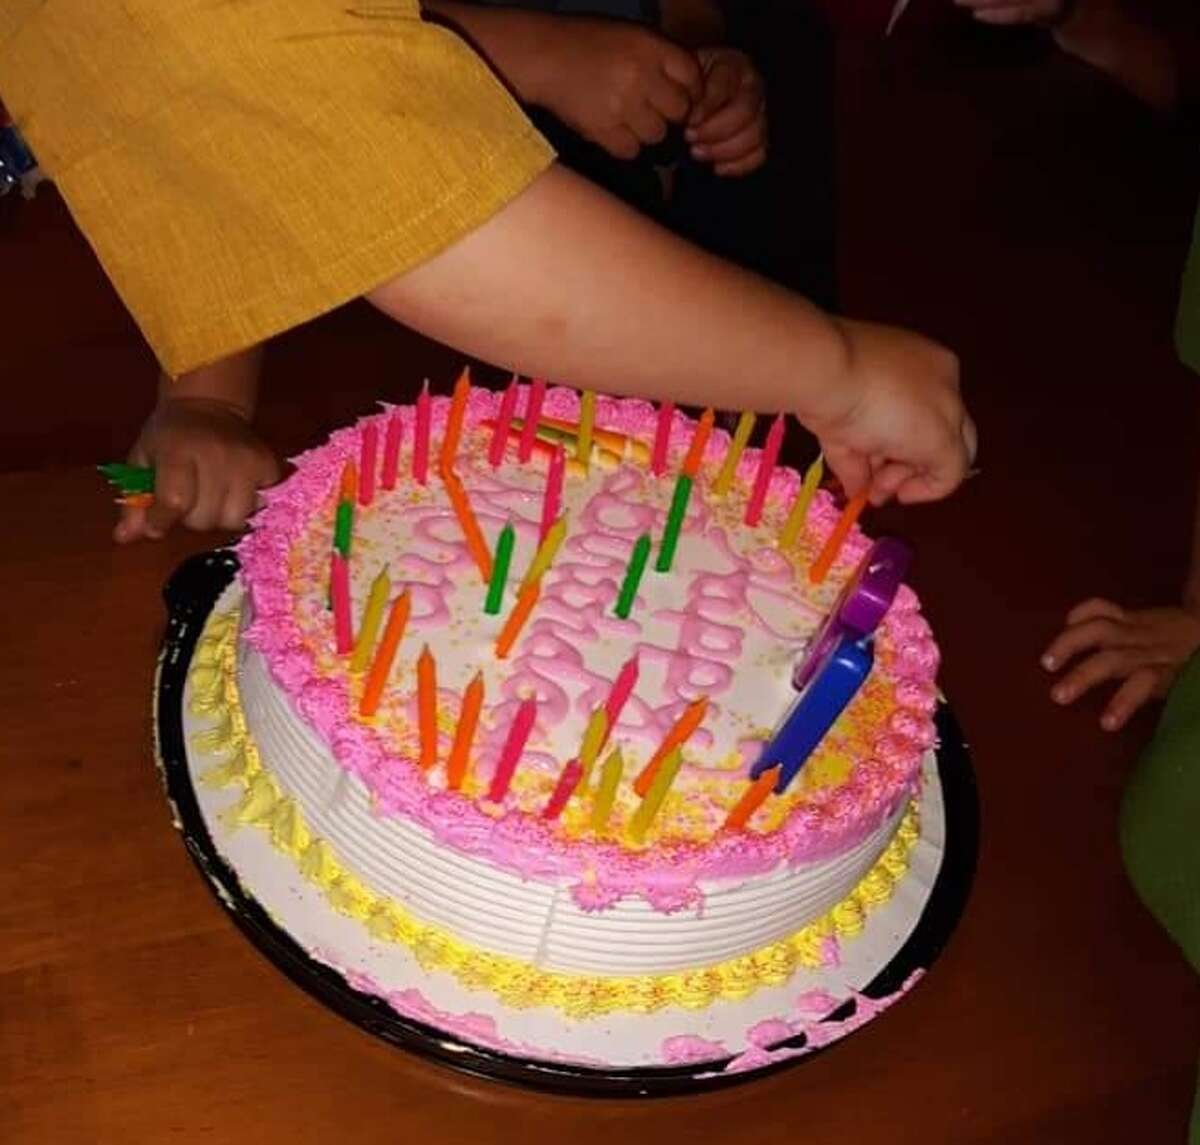 Lovina's grandchildren work on adding 51 candles to her birthday cake.